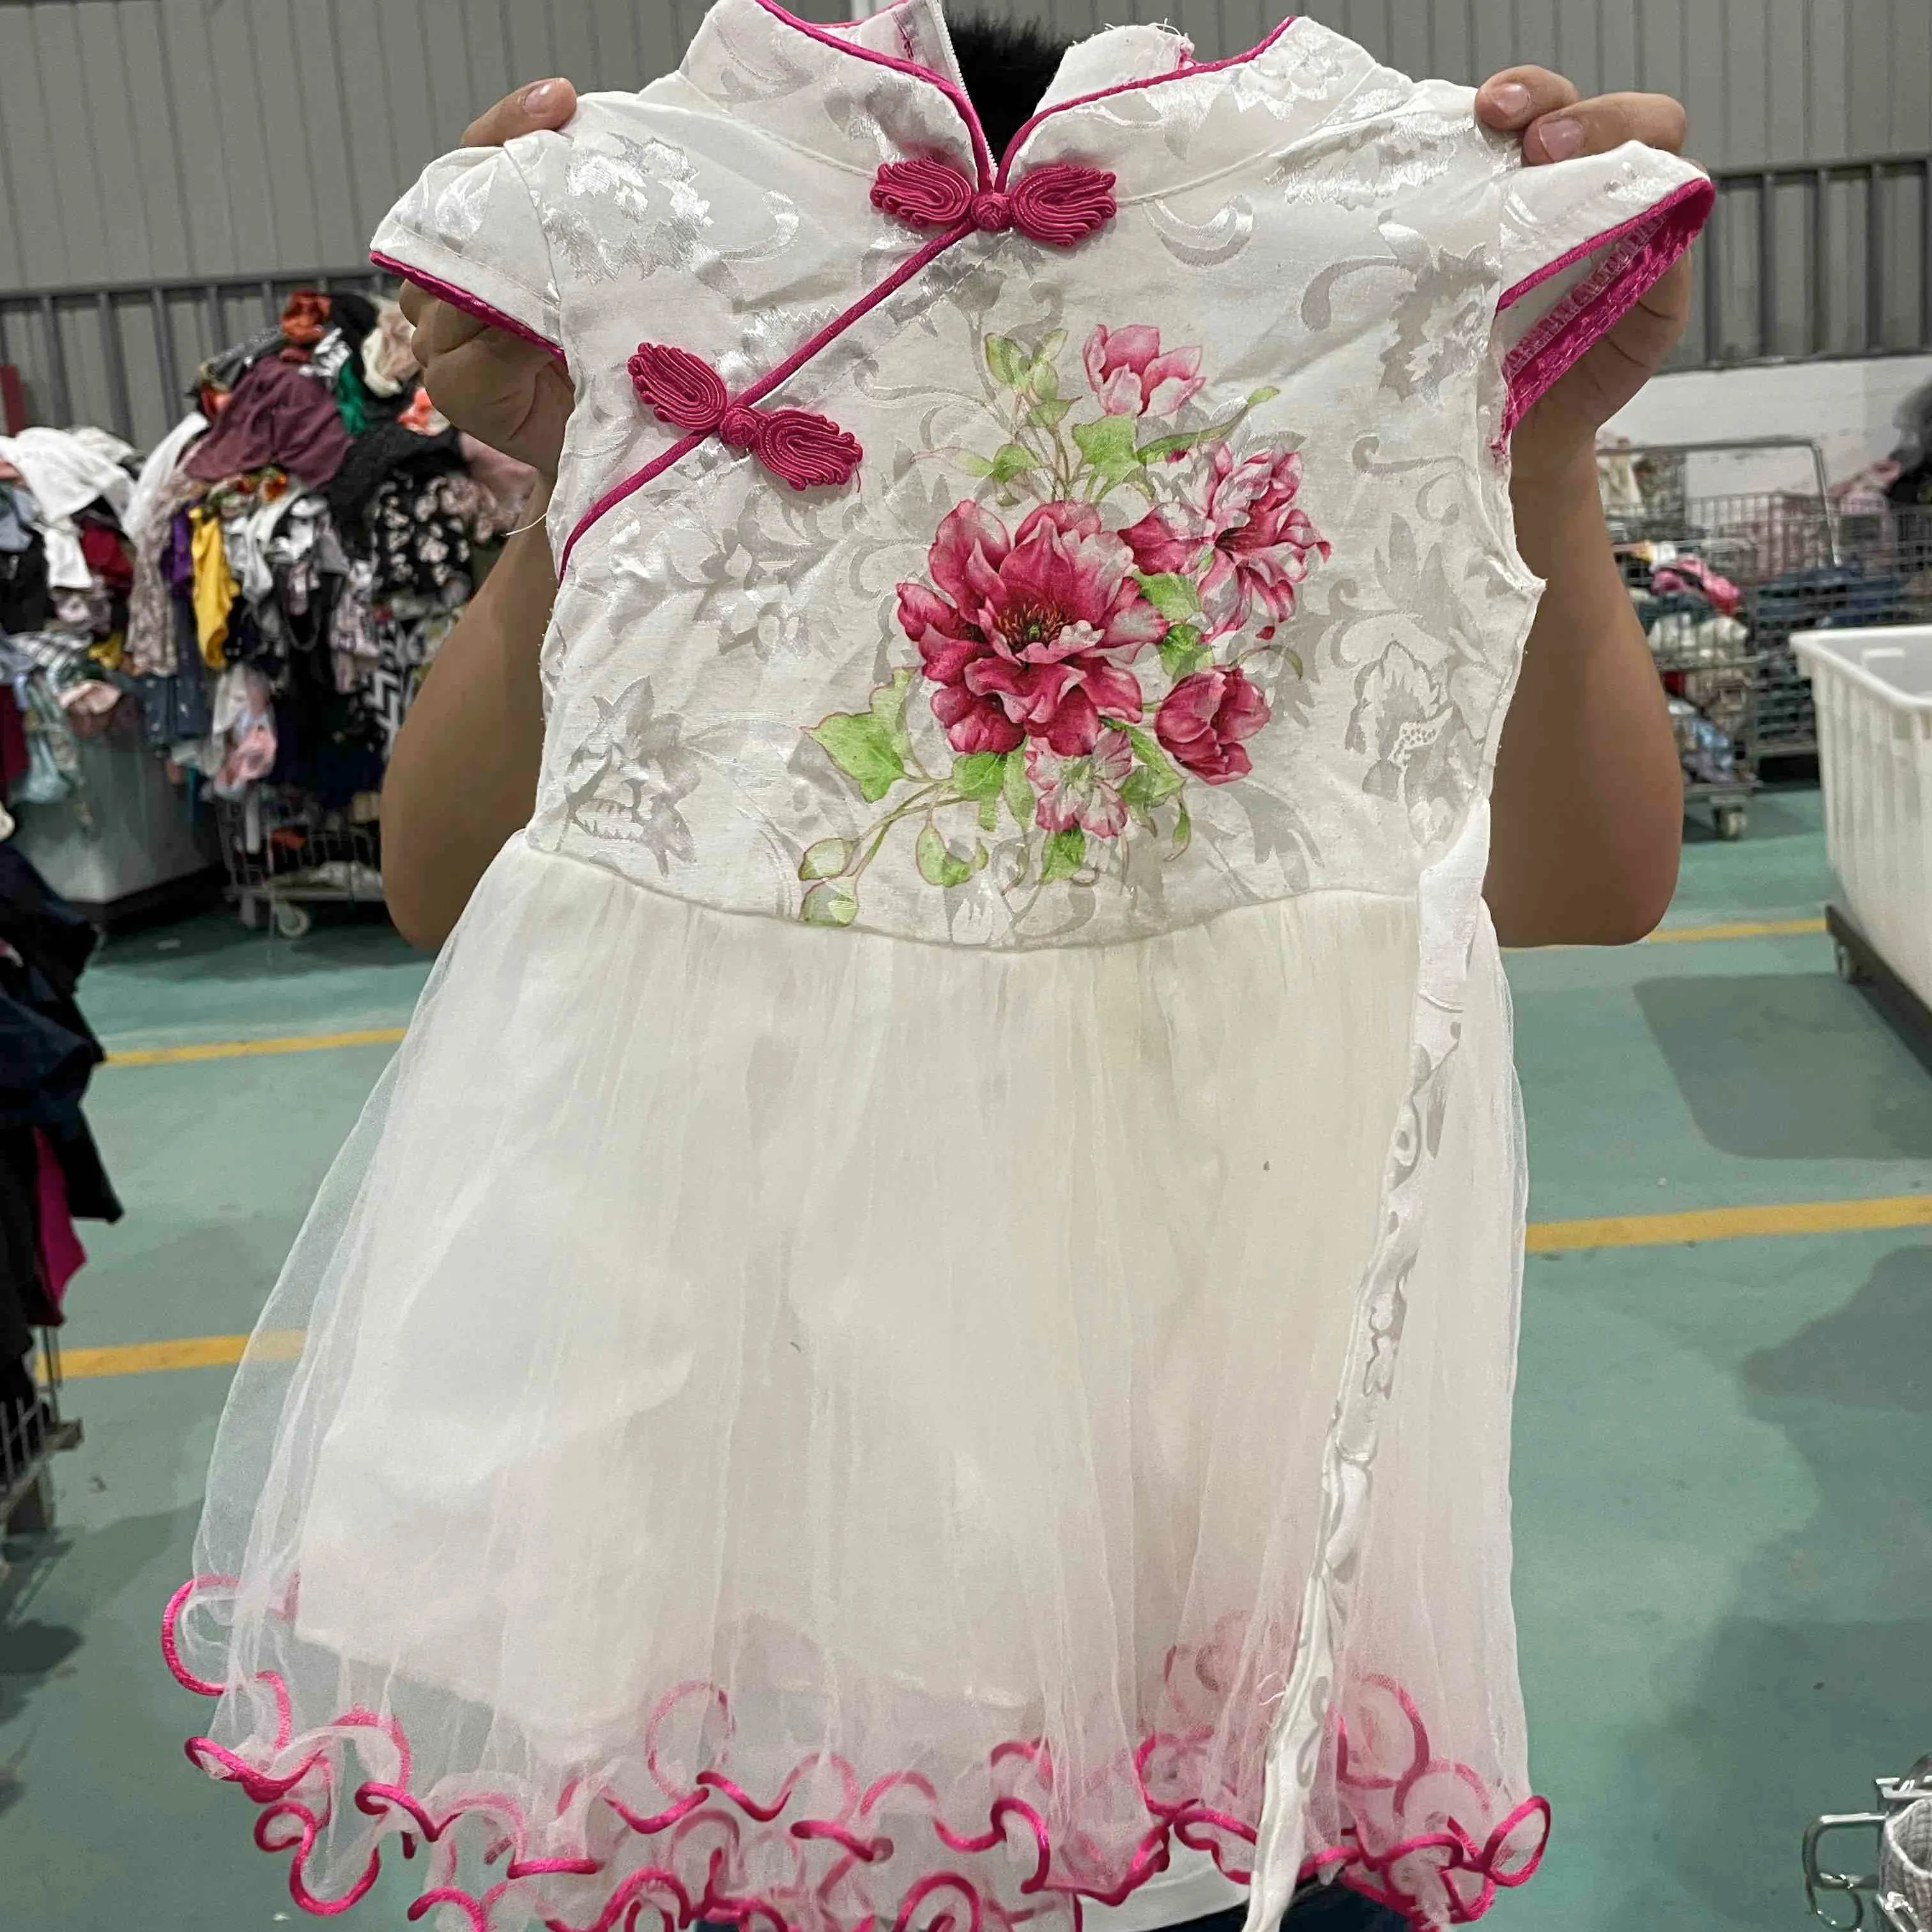 Vestiti di seconda mano in balle UK vestiti usati per bambini vestiti di seconda mano indossati balle usate vestiti per bambini ropa barata